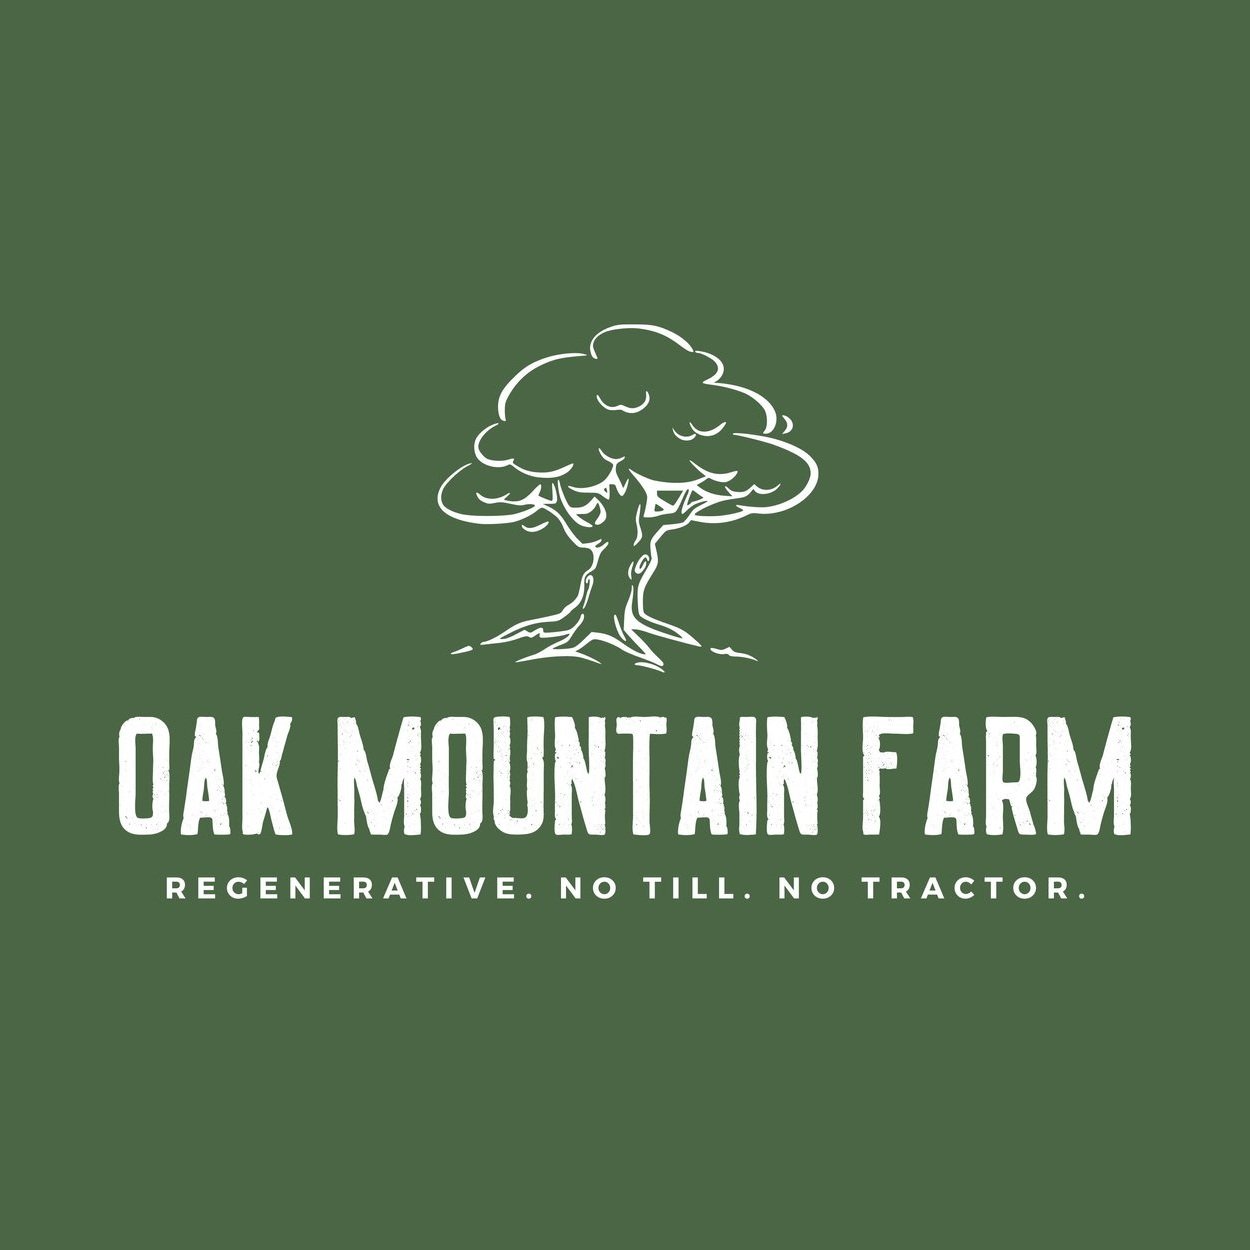 Oak Mountain Farm